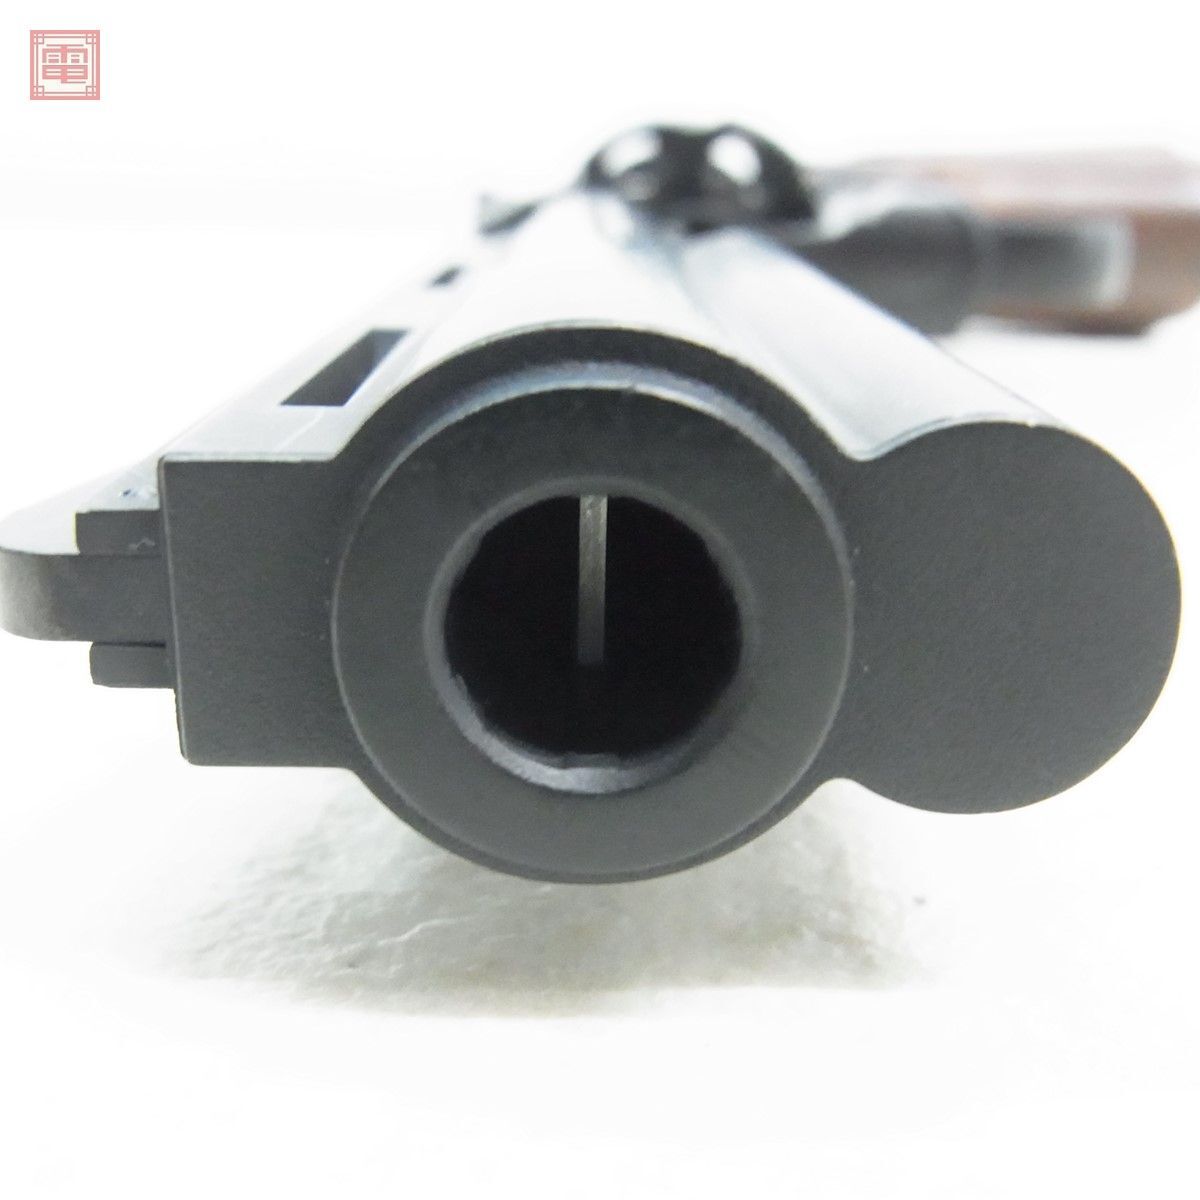 tanaka model gun Colt python 6 -inch wooden grip SPG present condition goods [20